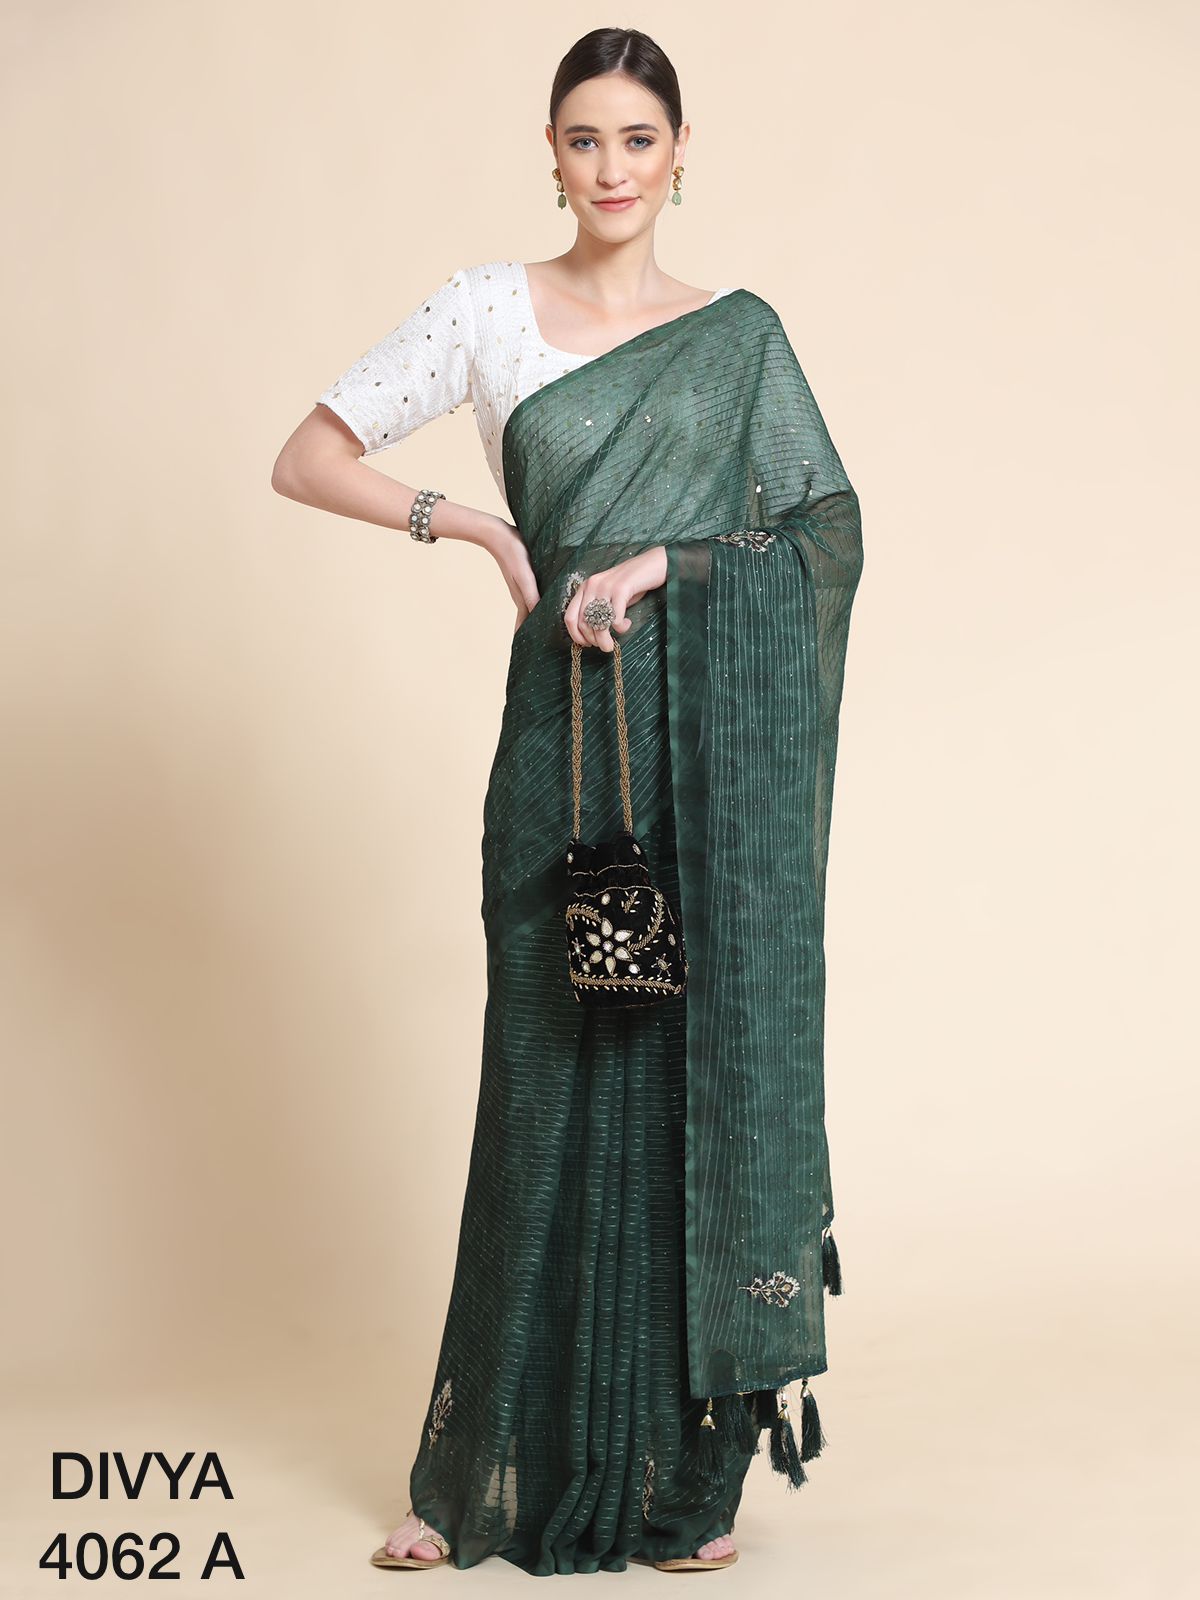 the style divya 4062 turkey gerogette decent look saree catalog